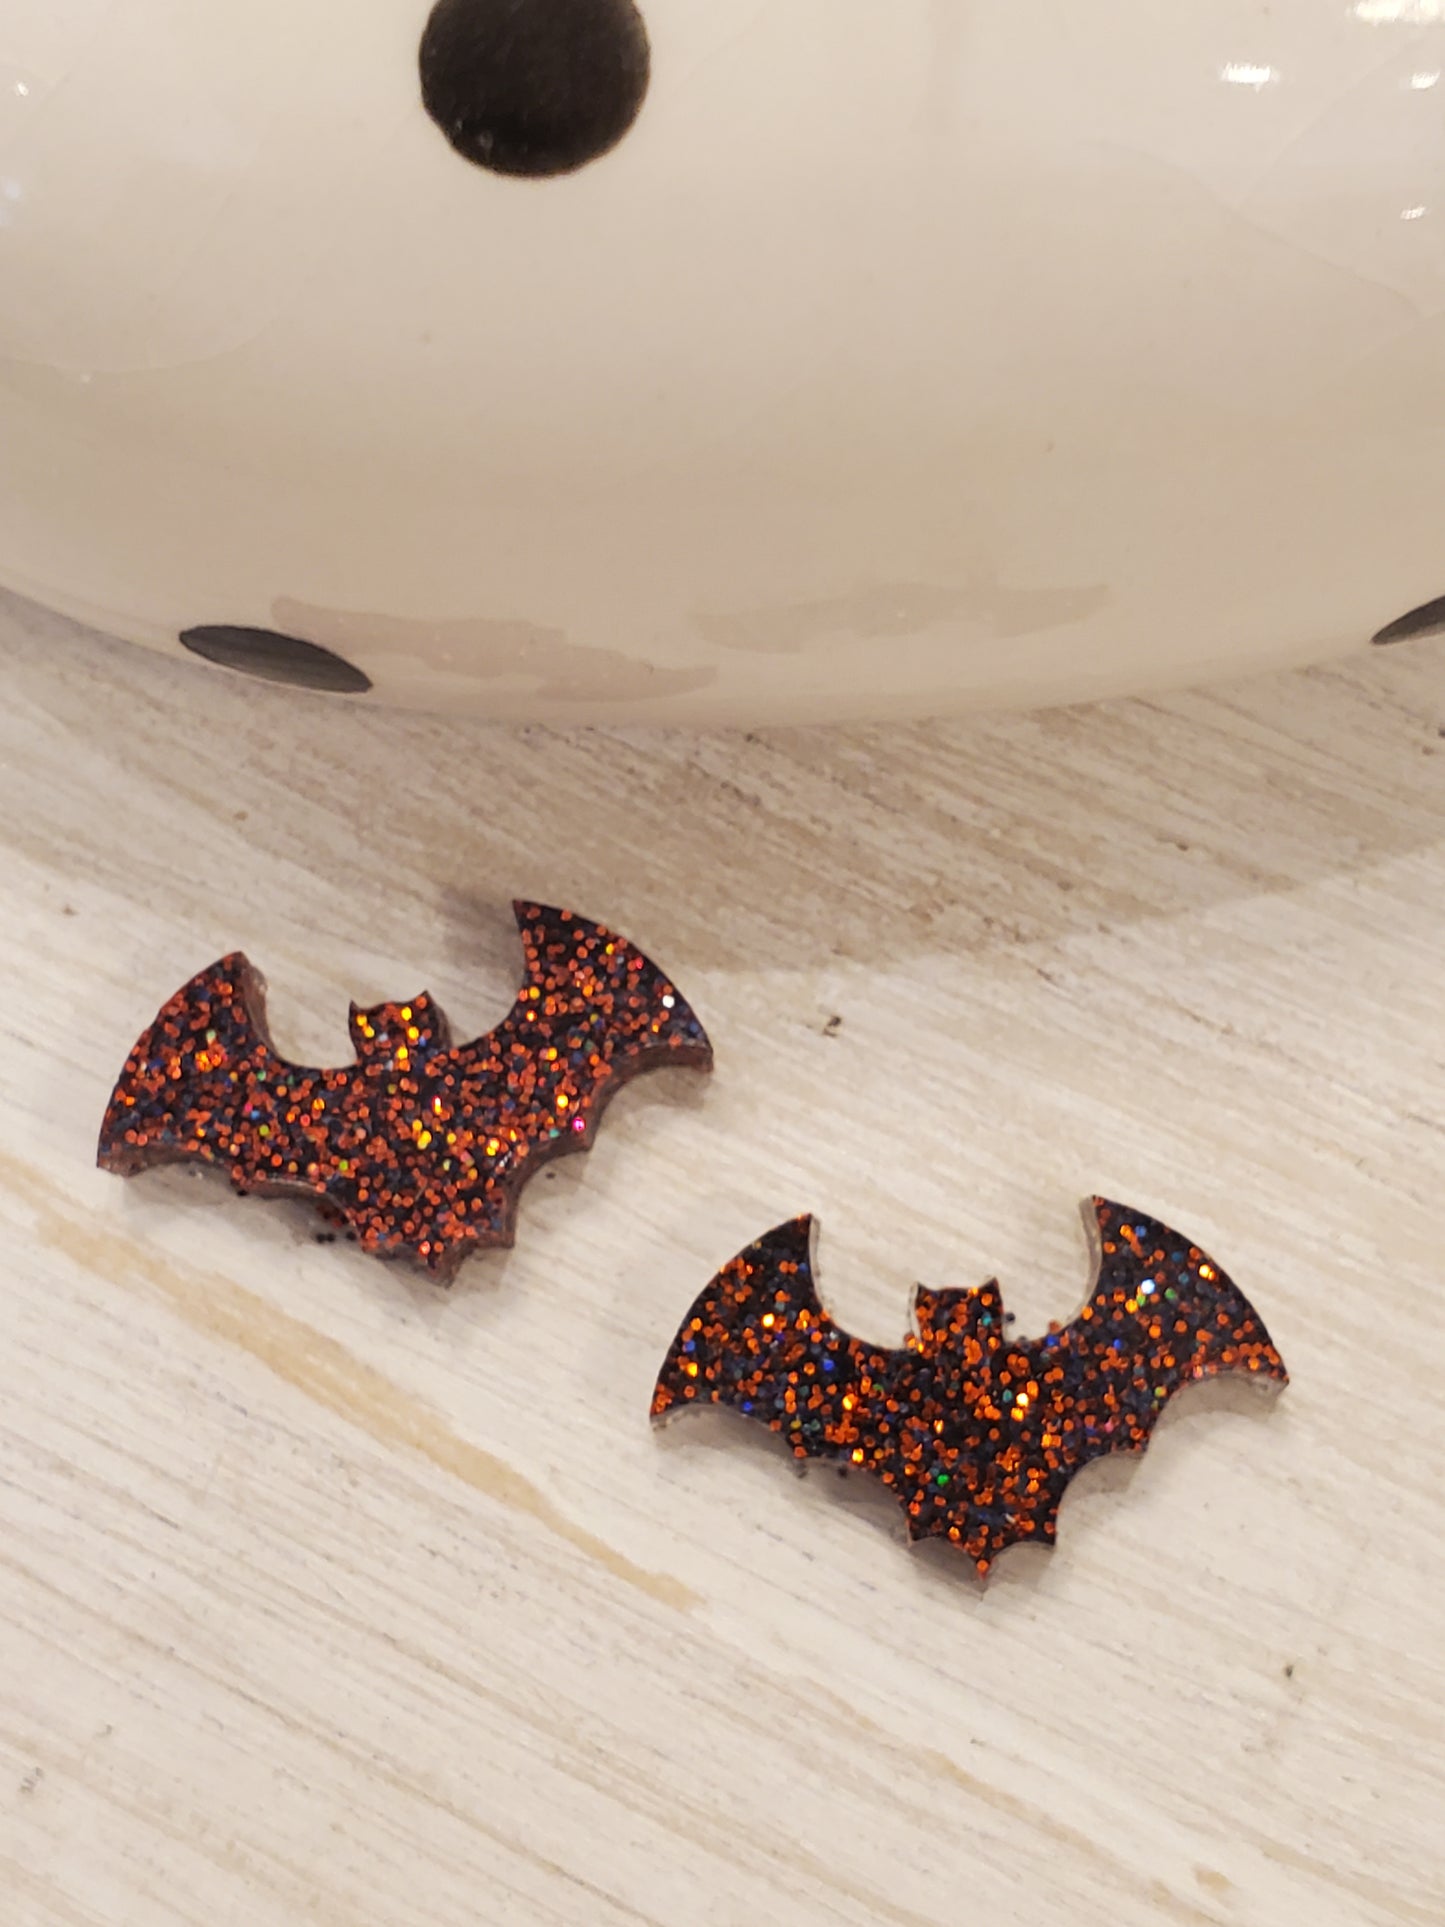 Handmade resin and glitter Bats Orange earrings small studs